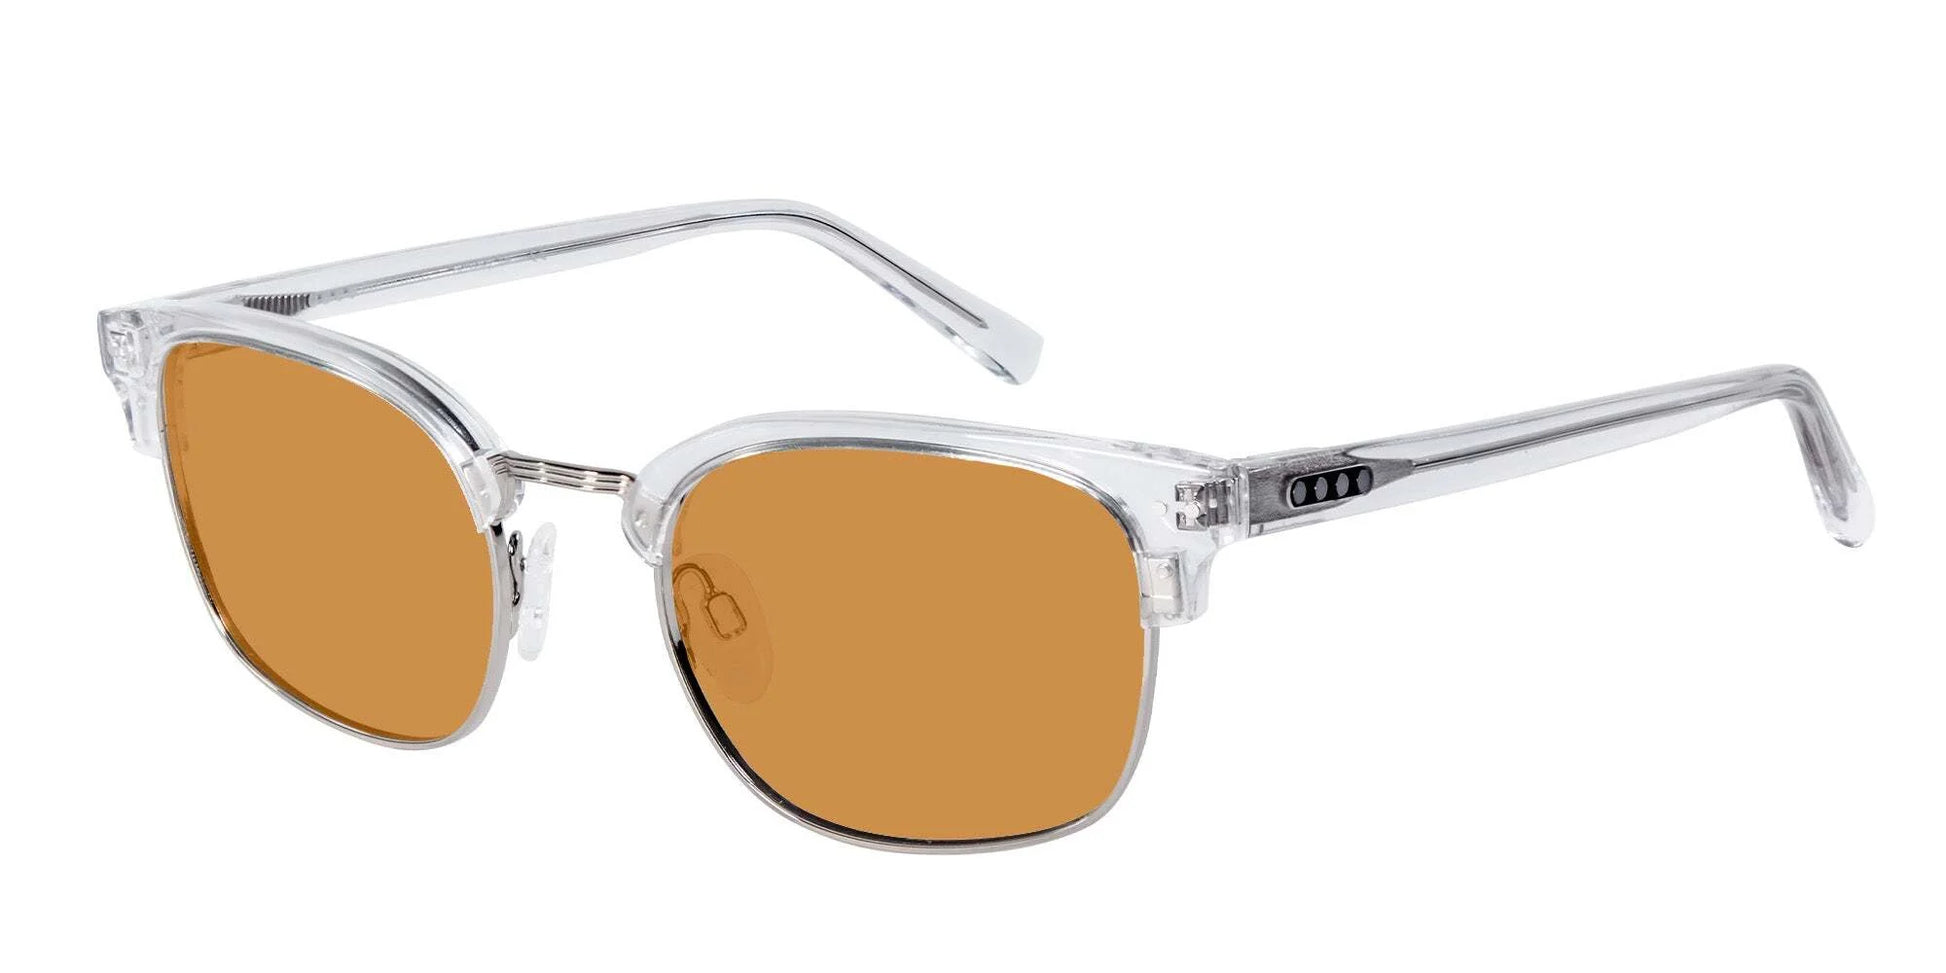 EnChroma Derby LX Sunglasses Clear / LX3 Chestnut